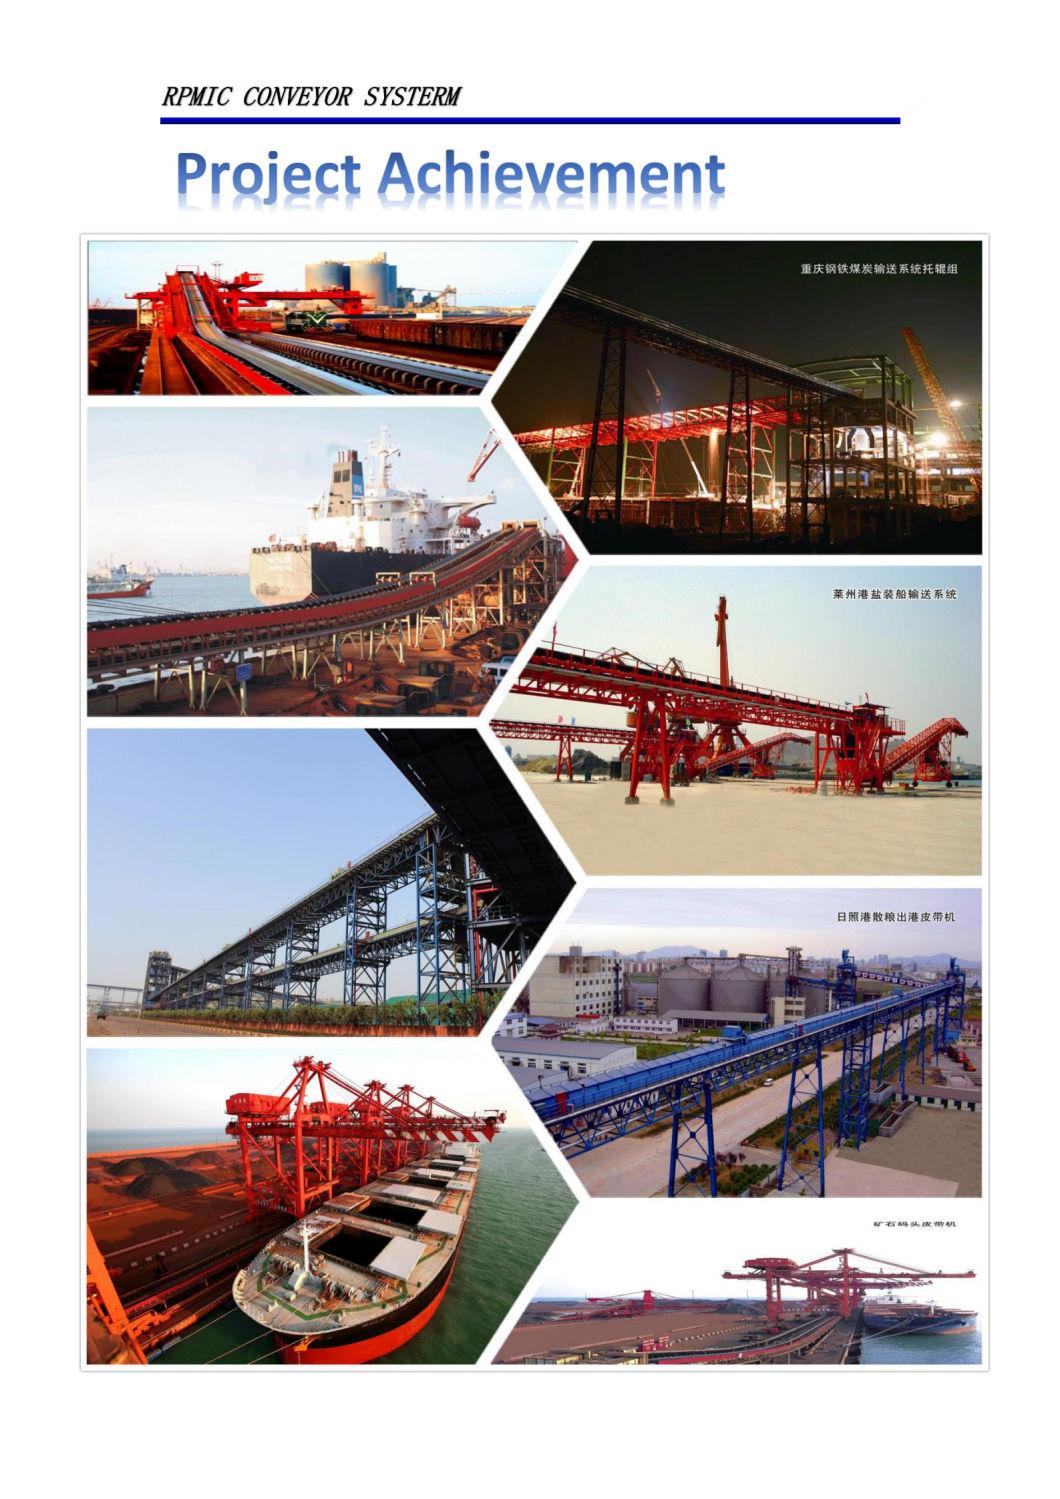 JIS/DIN Standard Steel Idler for Conveyor for Chemical Industry